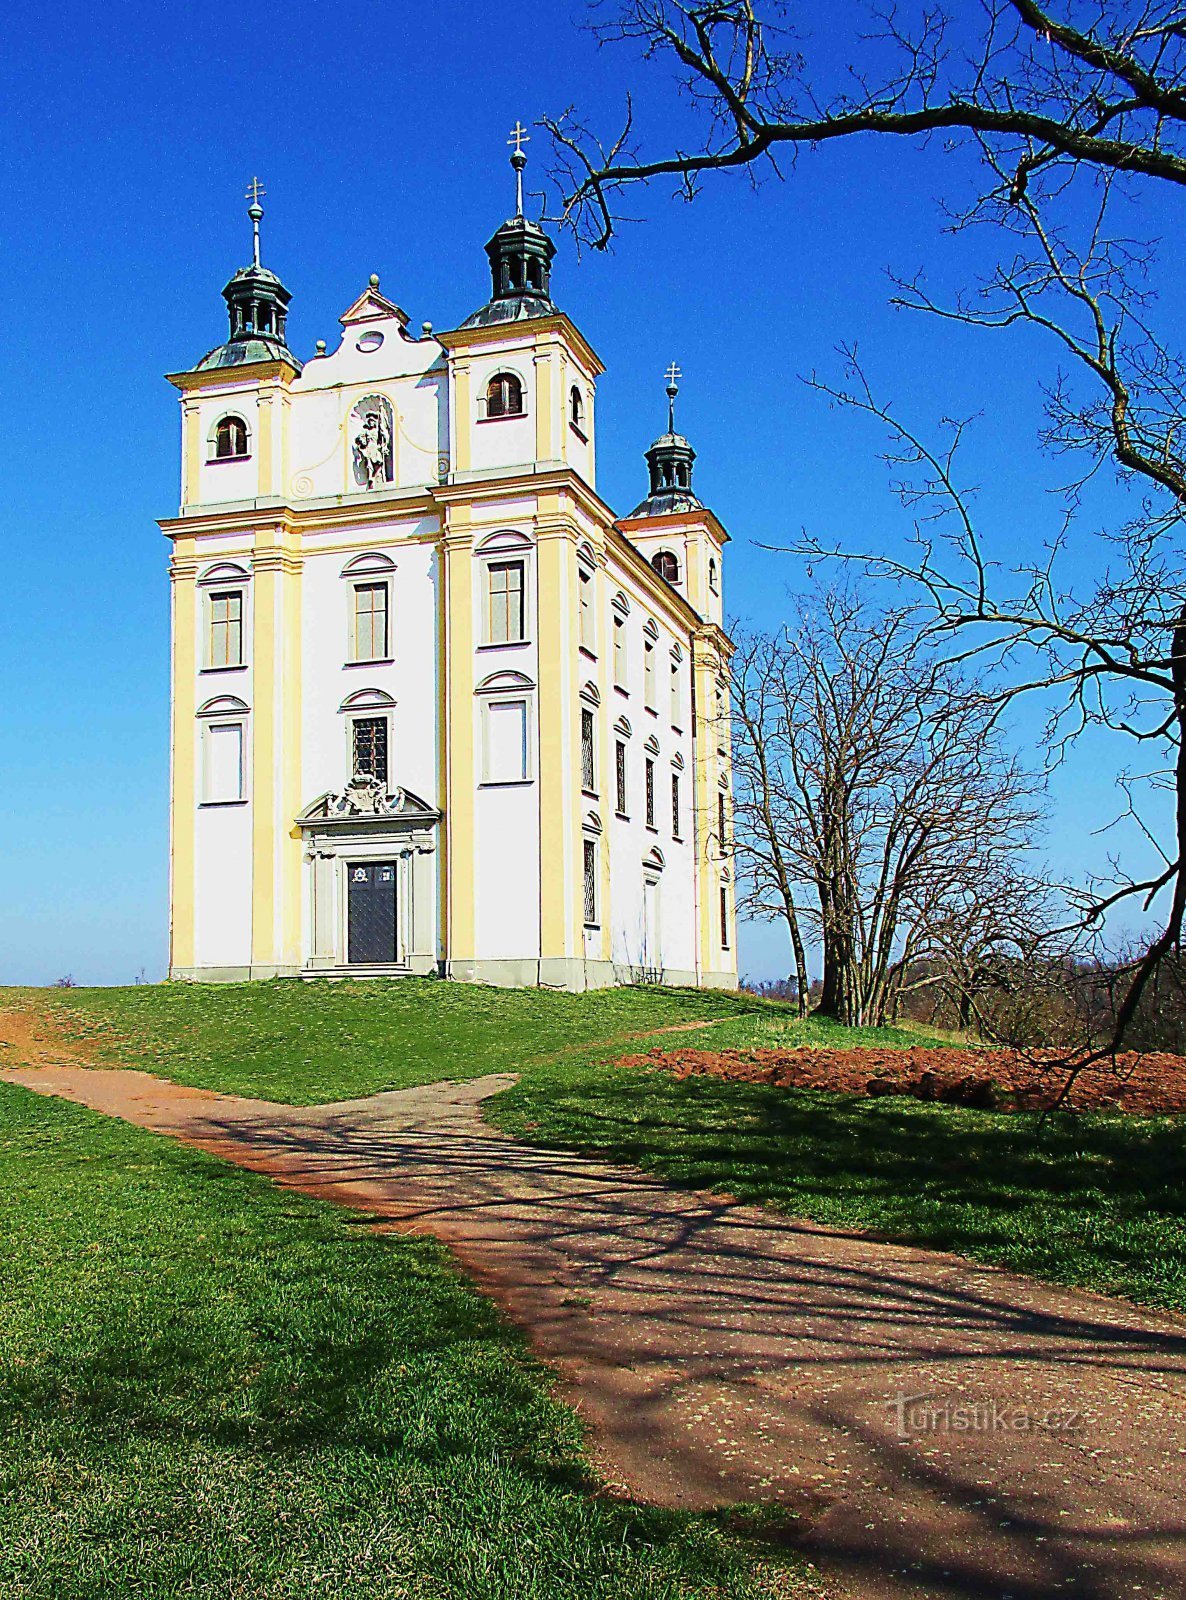 Dominante di Moravský Krumlov - Cappella di S. Floriana